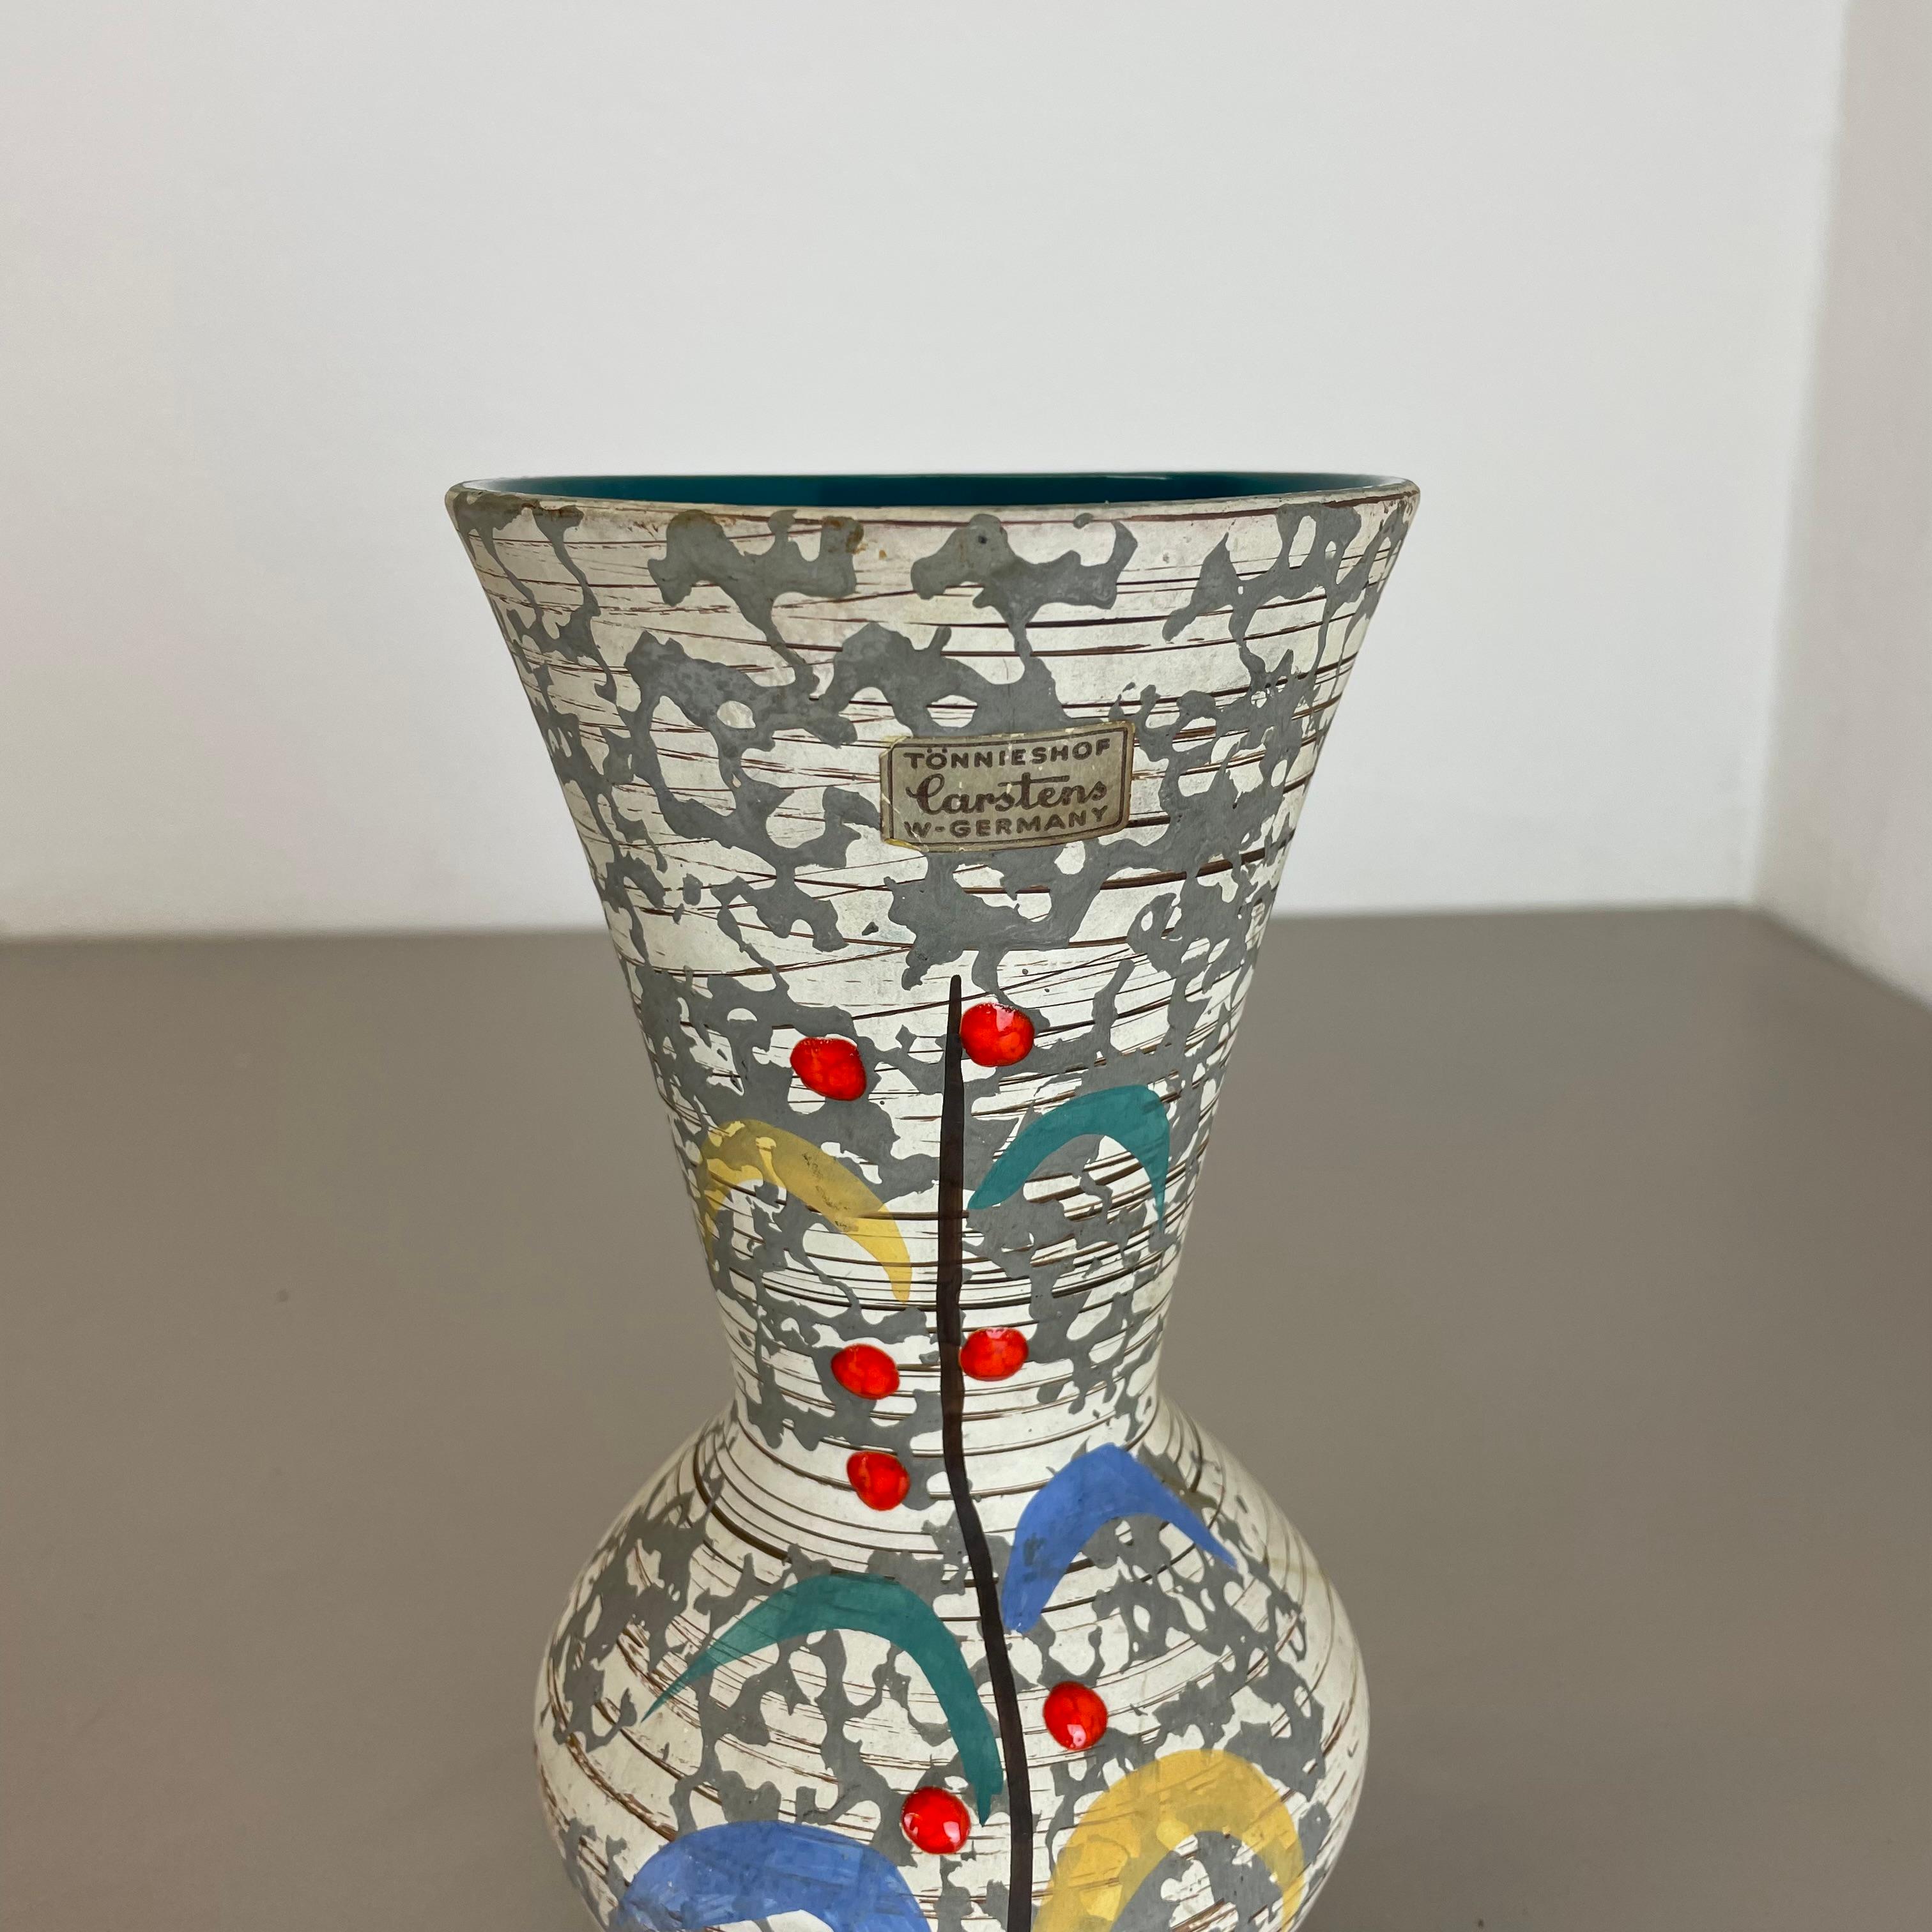 Super Glaze ABSTRACT Ceramic Pottery Vase Carstens Tönnieshof Germany, 1950s For Sale 3